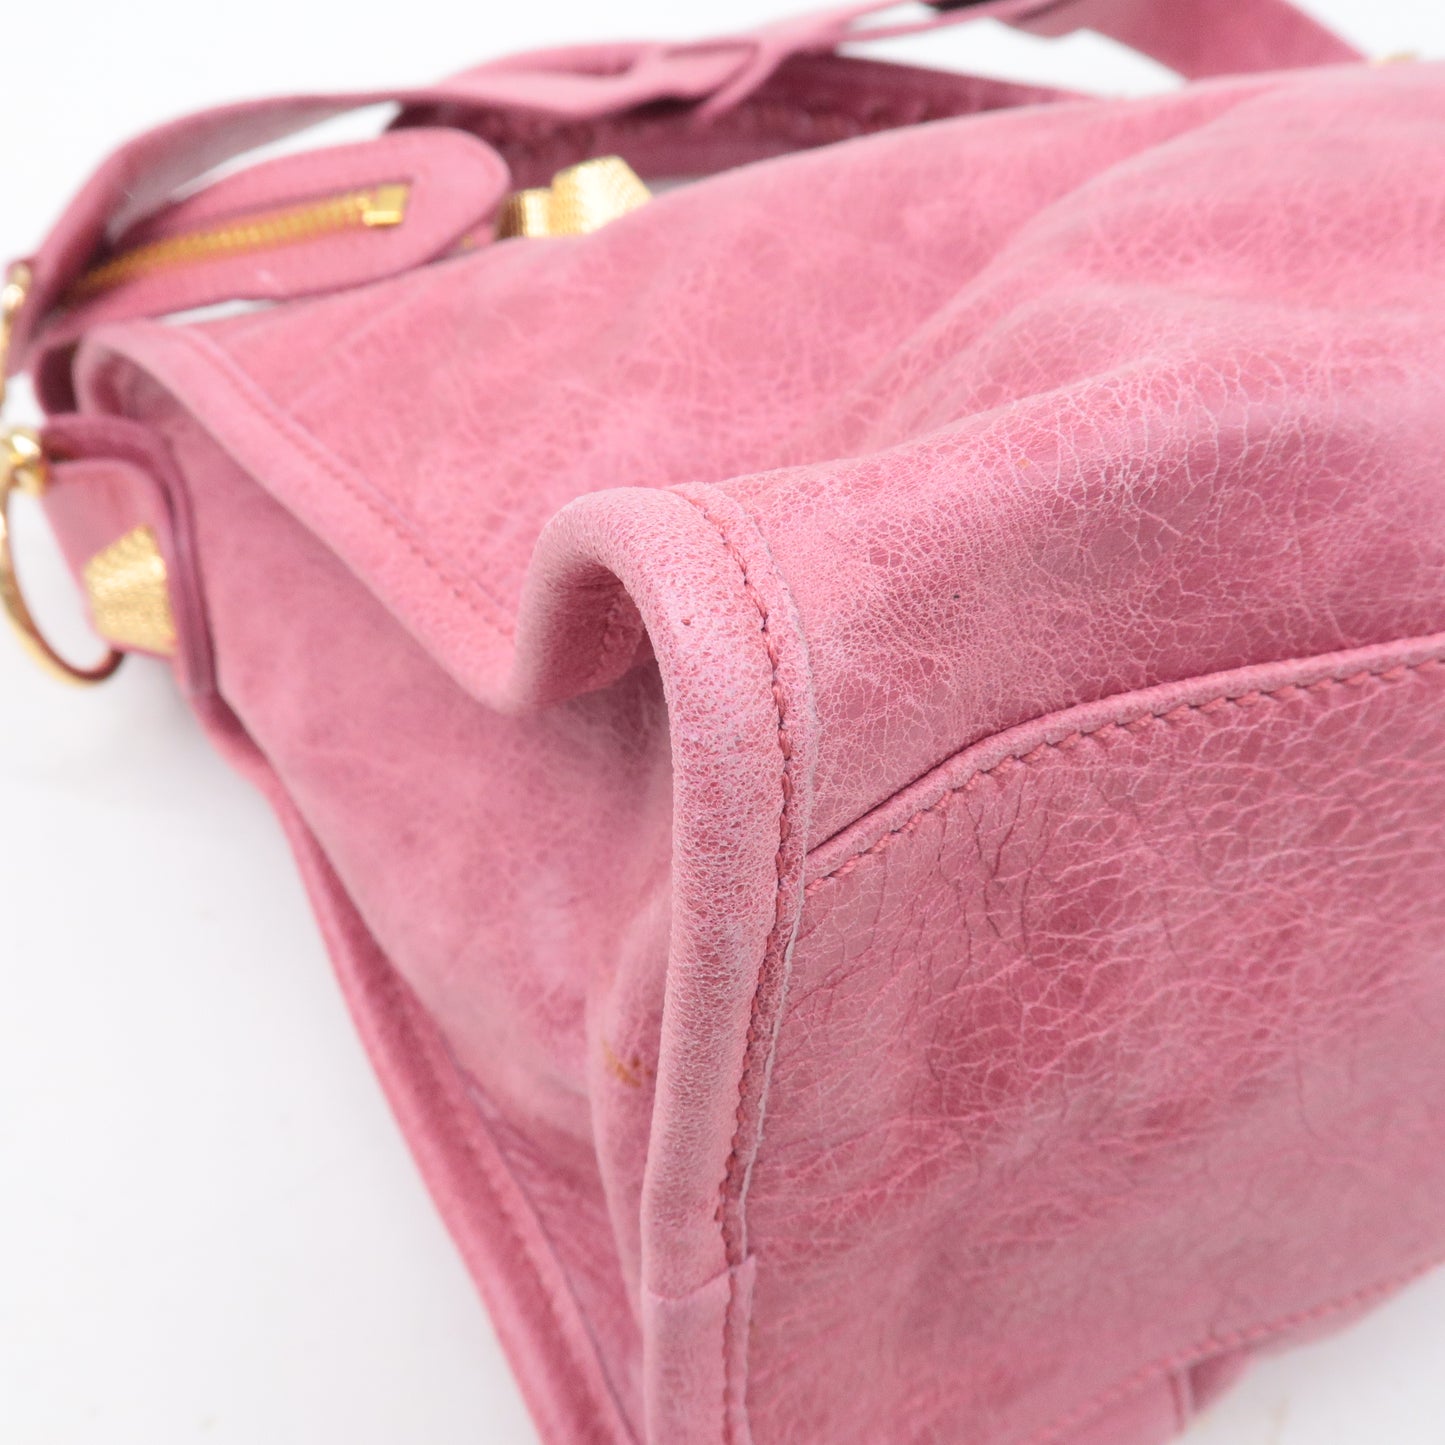 BALENCIAGA The Giant City Leather Hand Bag Pink 173084